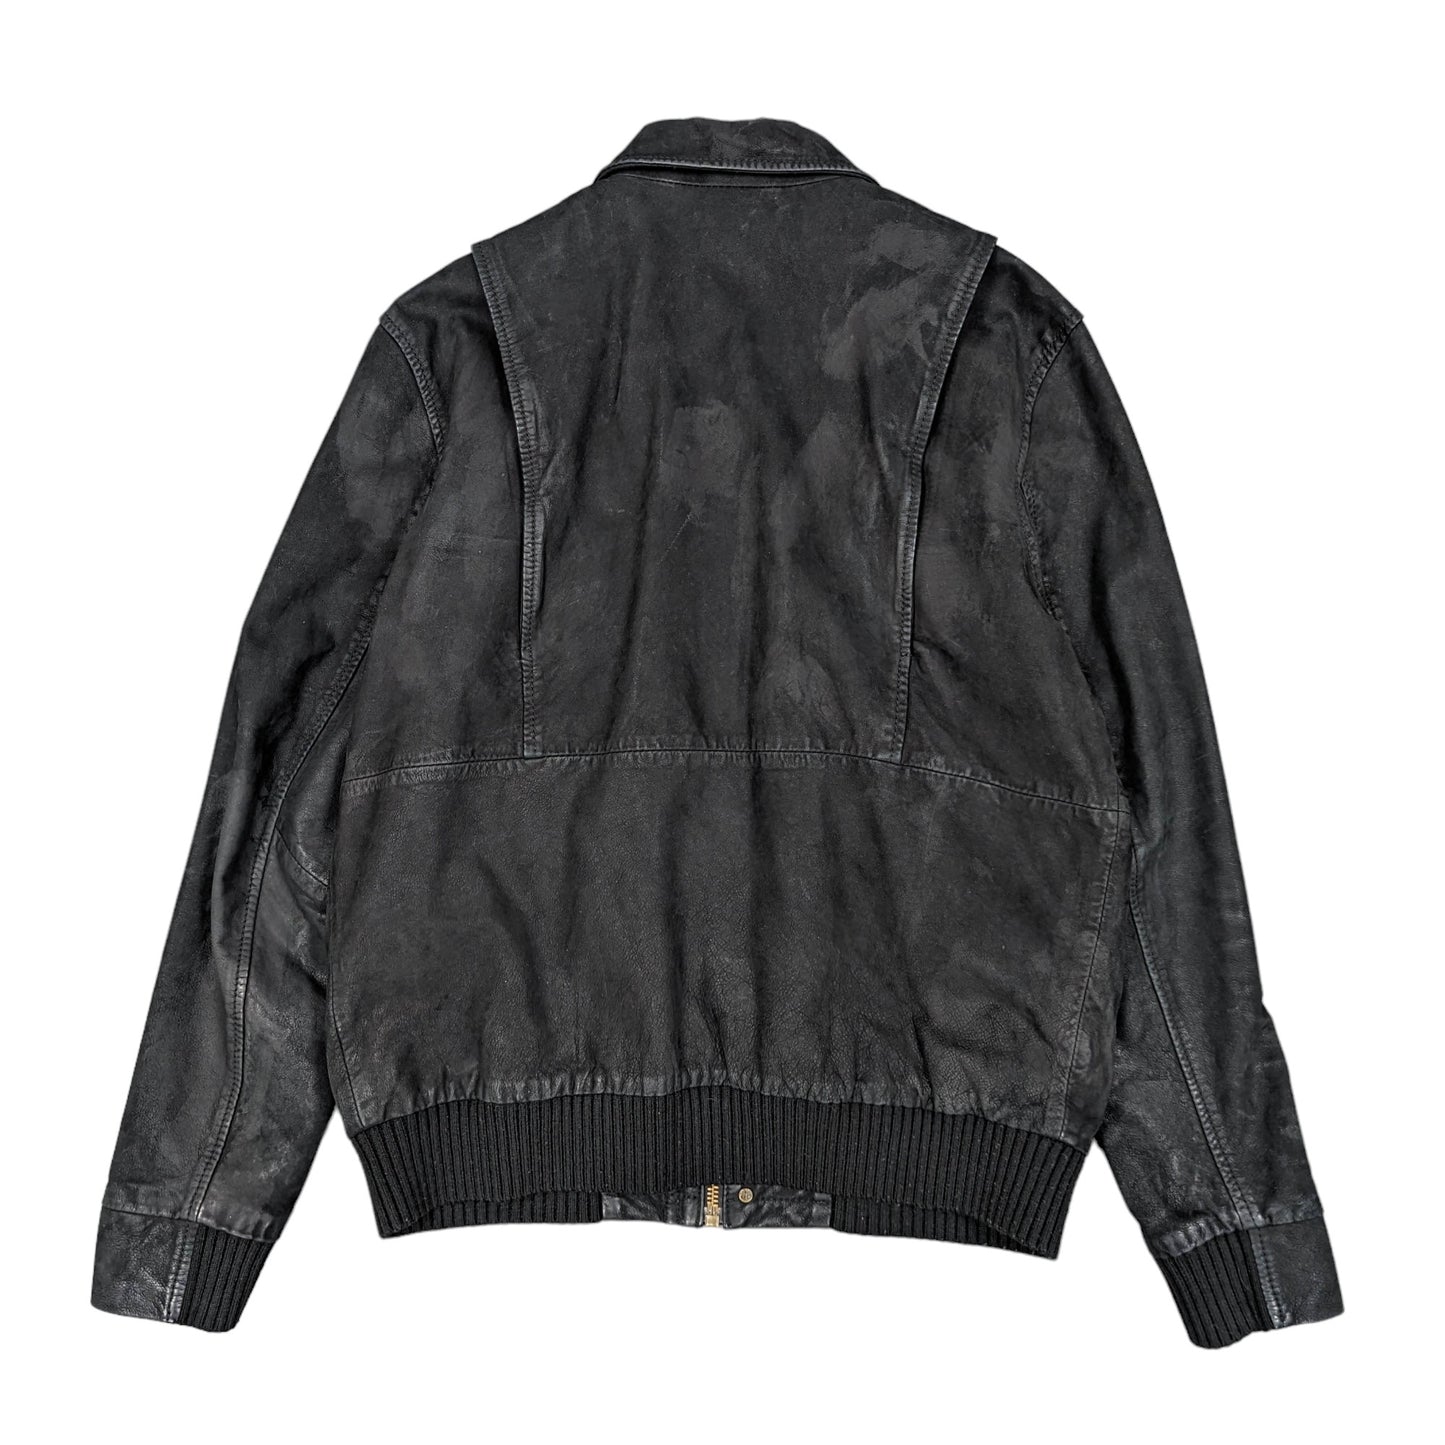 Timberland Leather Jacket Size L